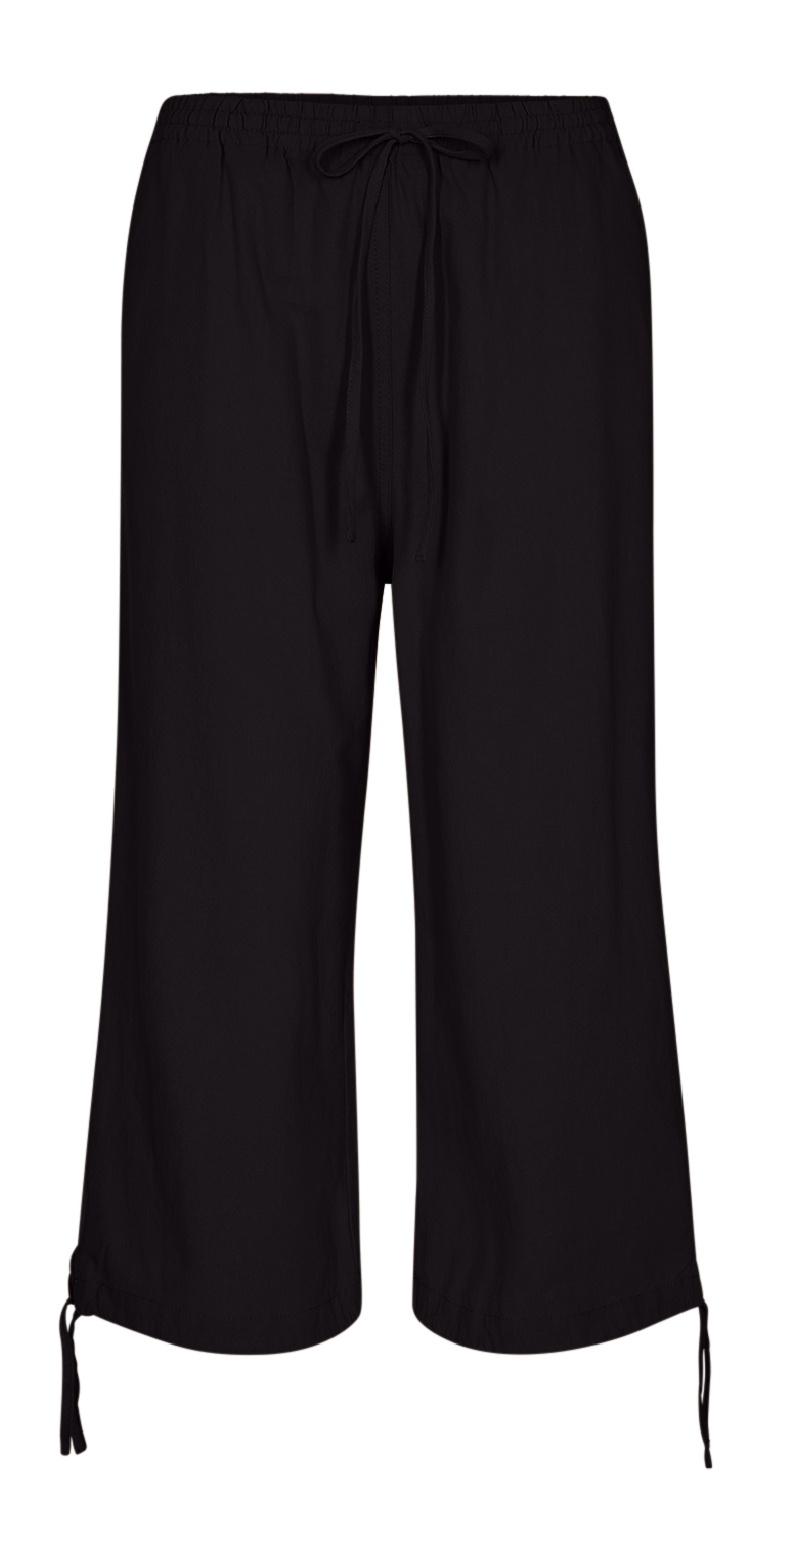 capri bukser med bindebånd og snøre